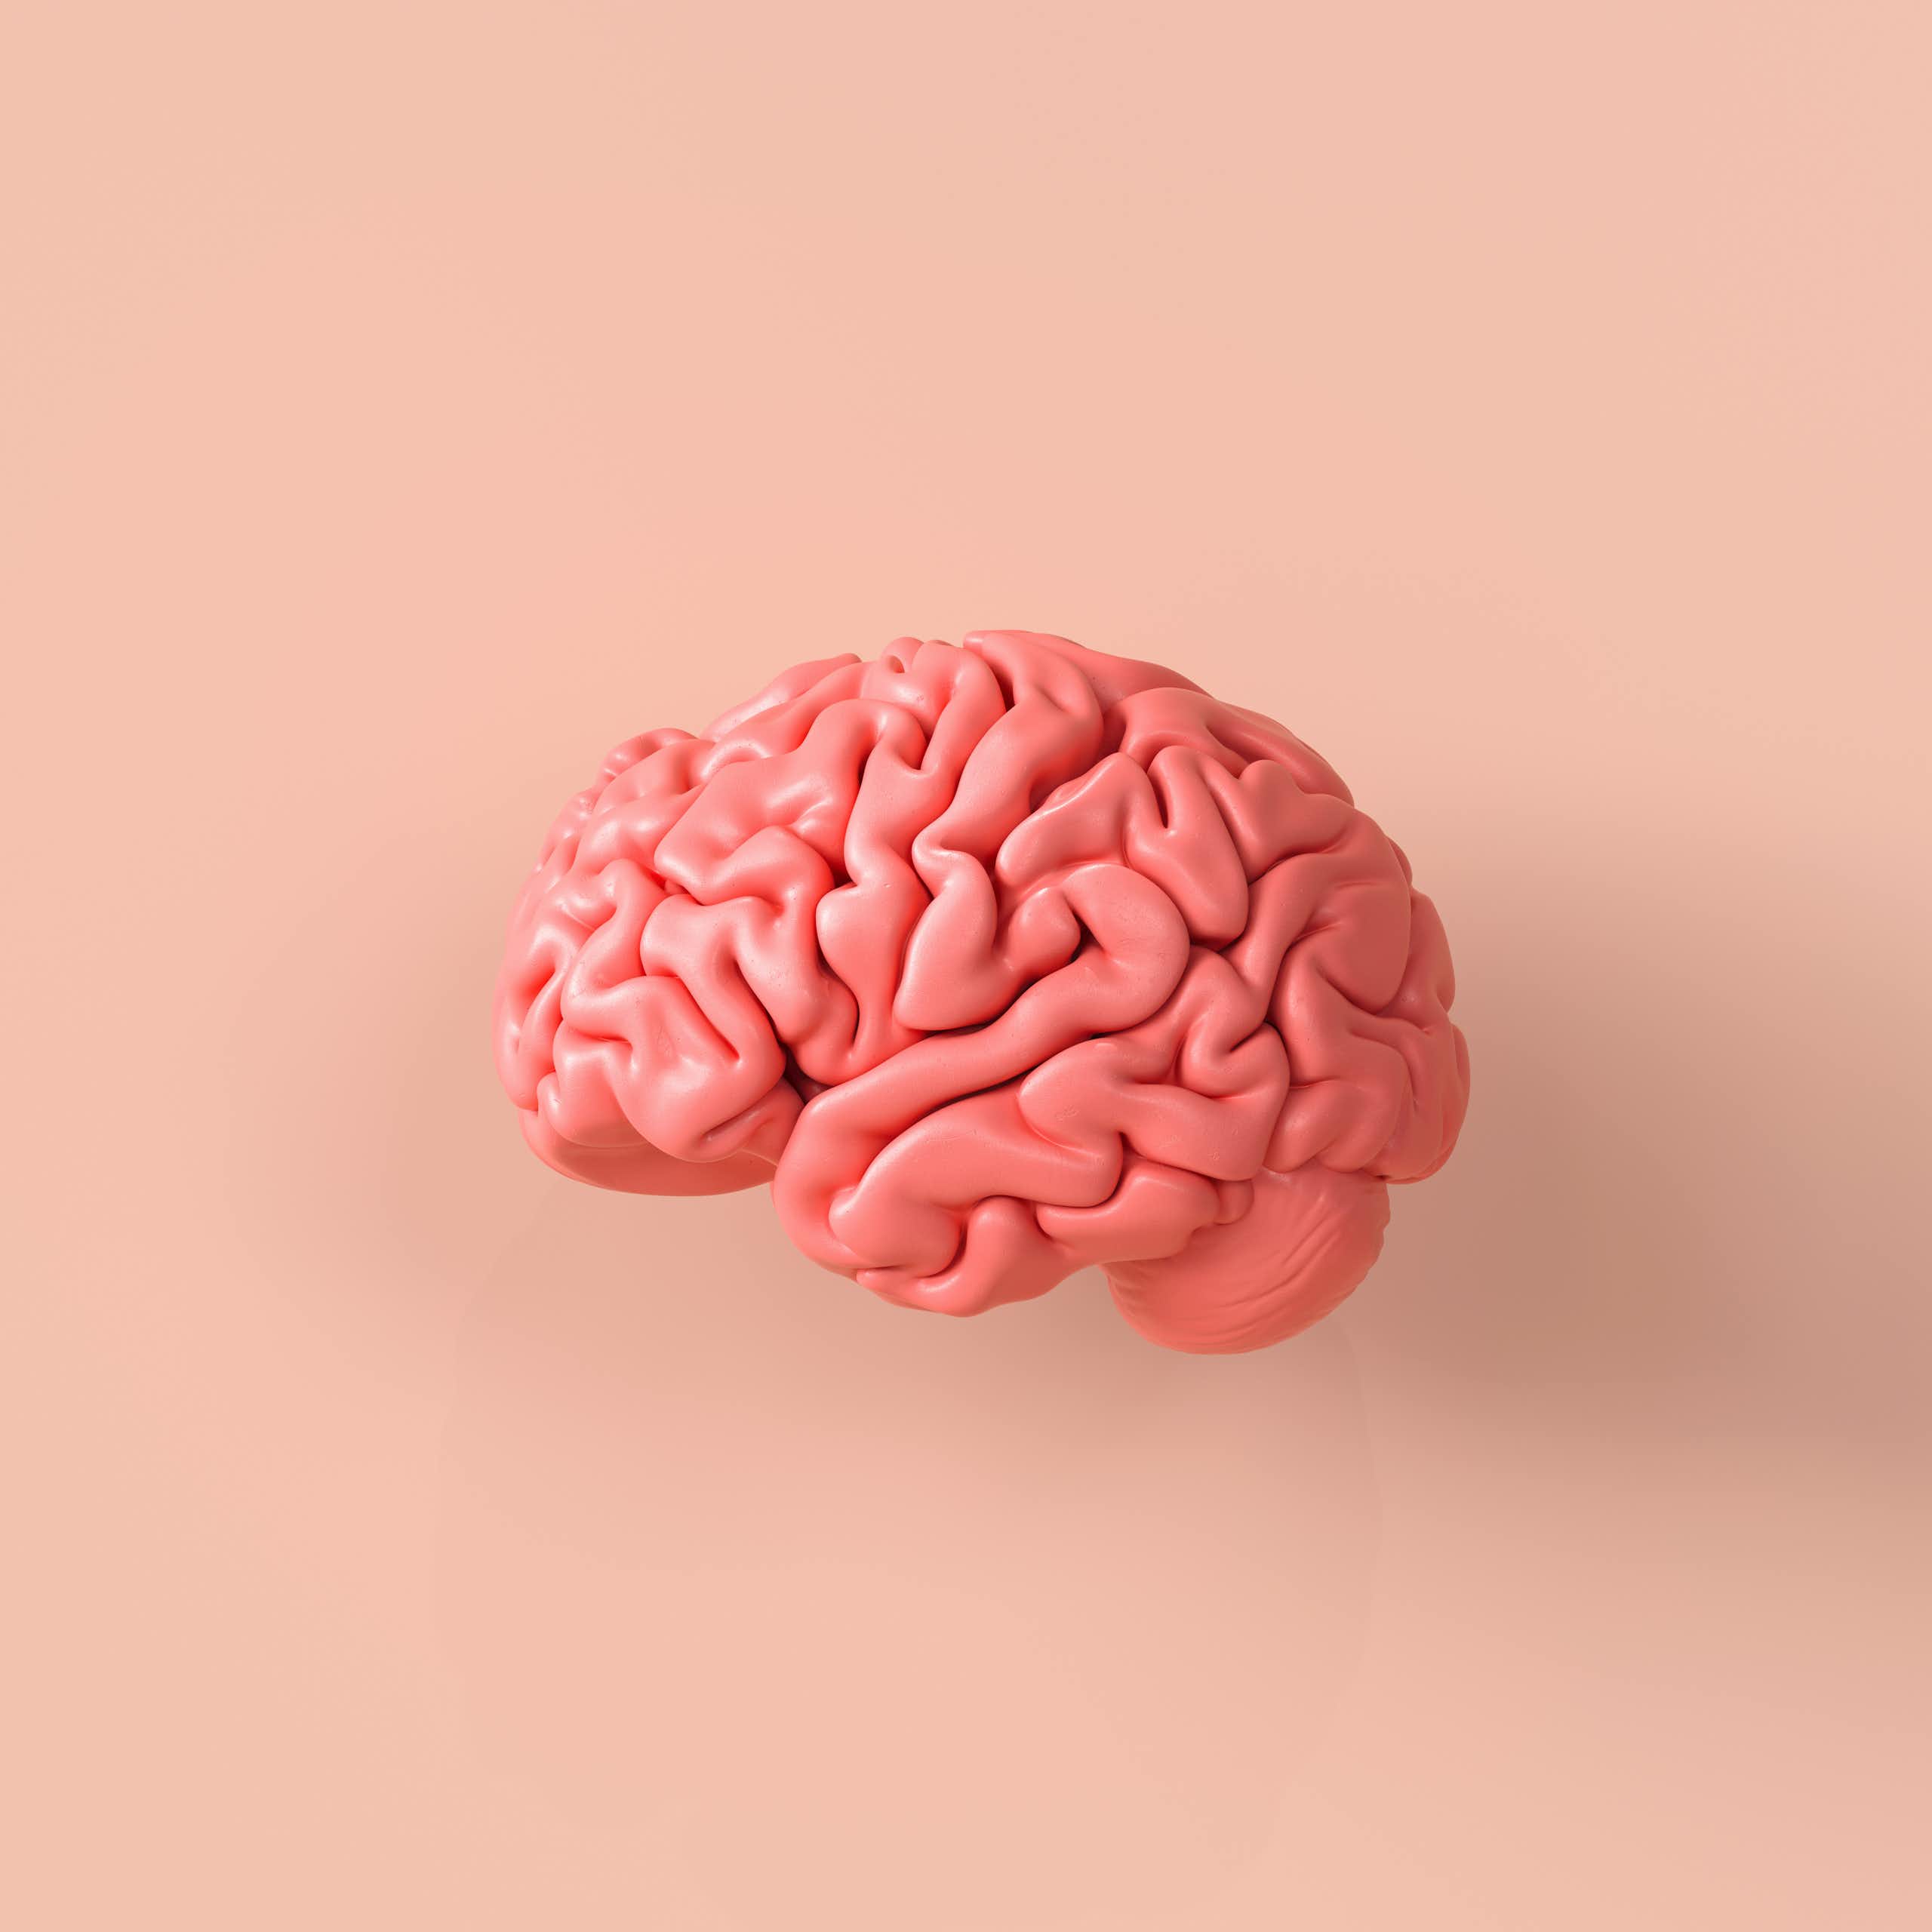 A human brain on a flesh coloured background